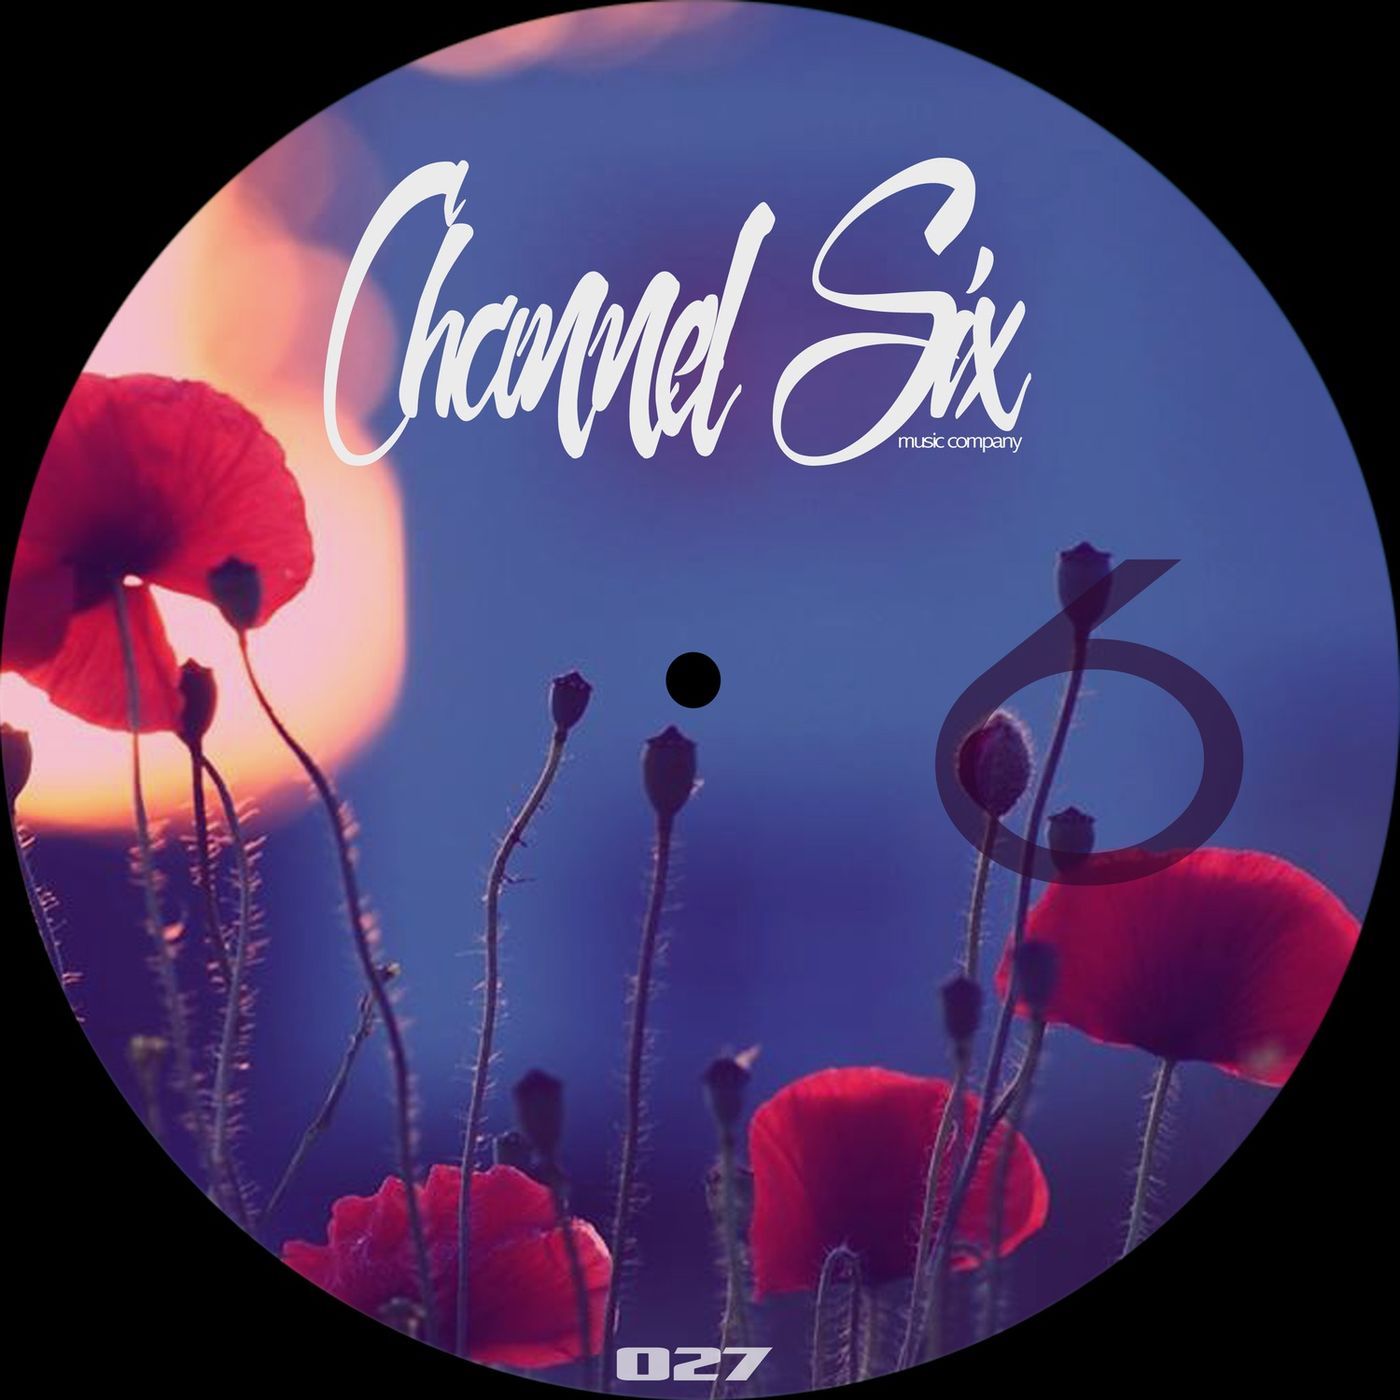 Alex Gómez - This Love EP / Channel Six Music Company